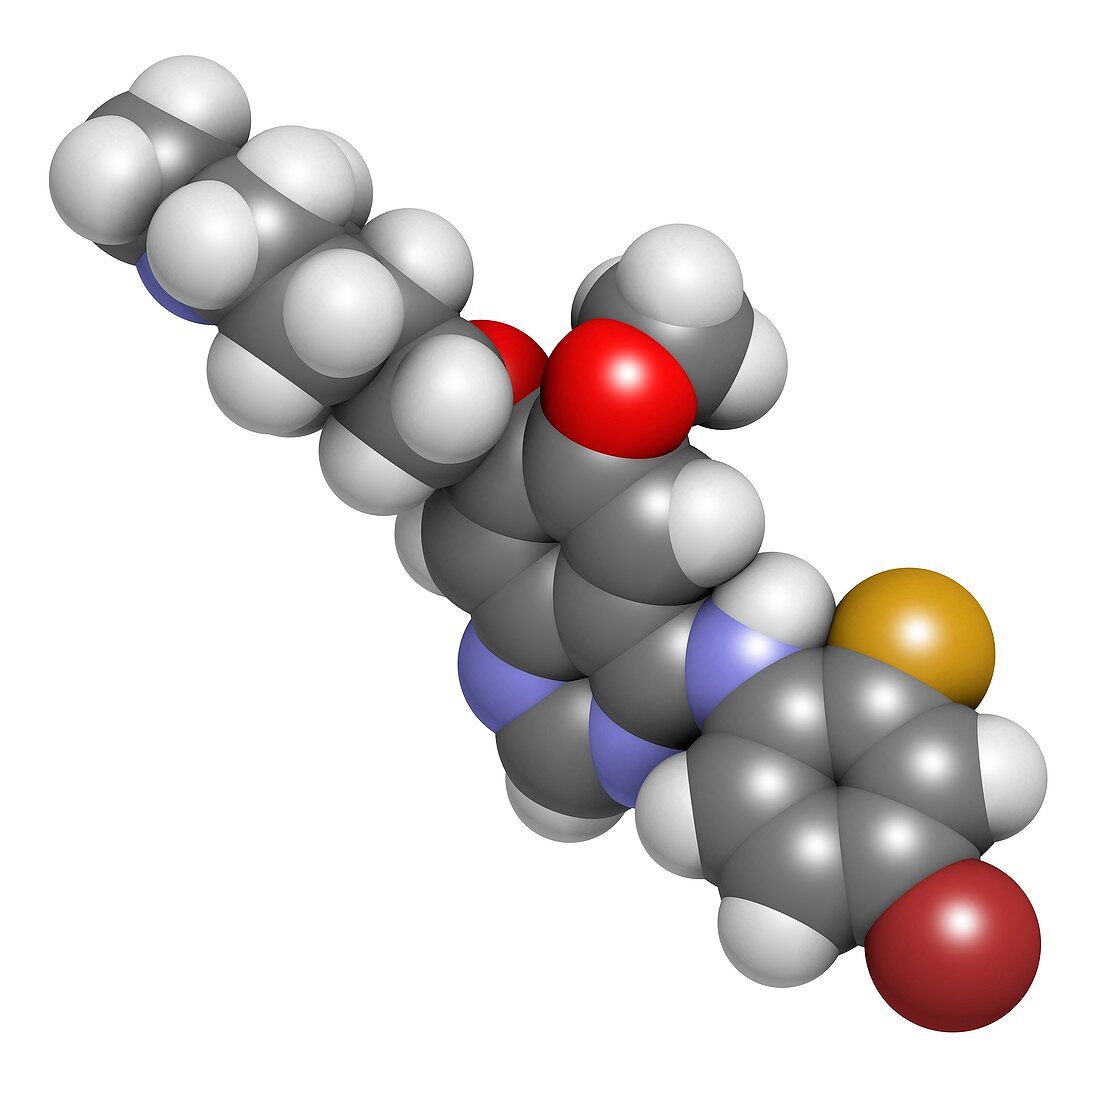 Vandetanib cancer drug molecule